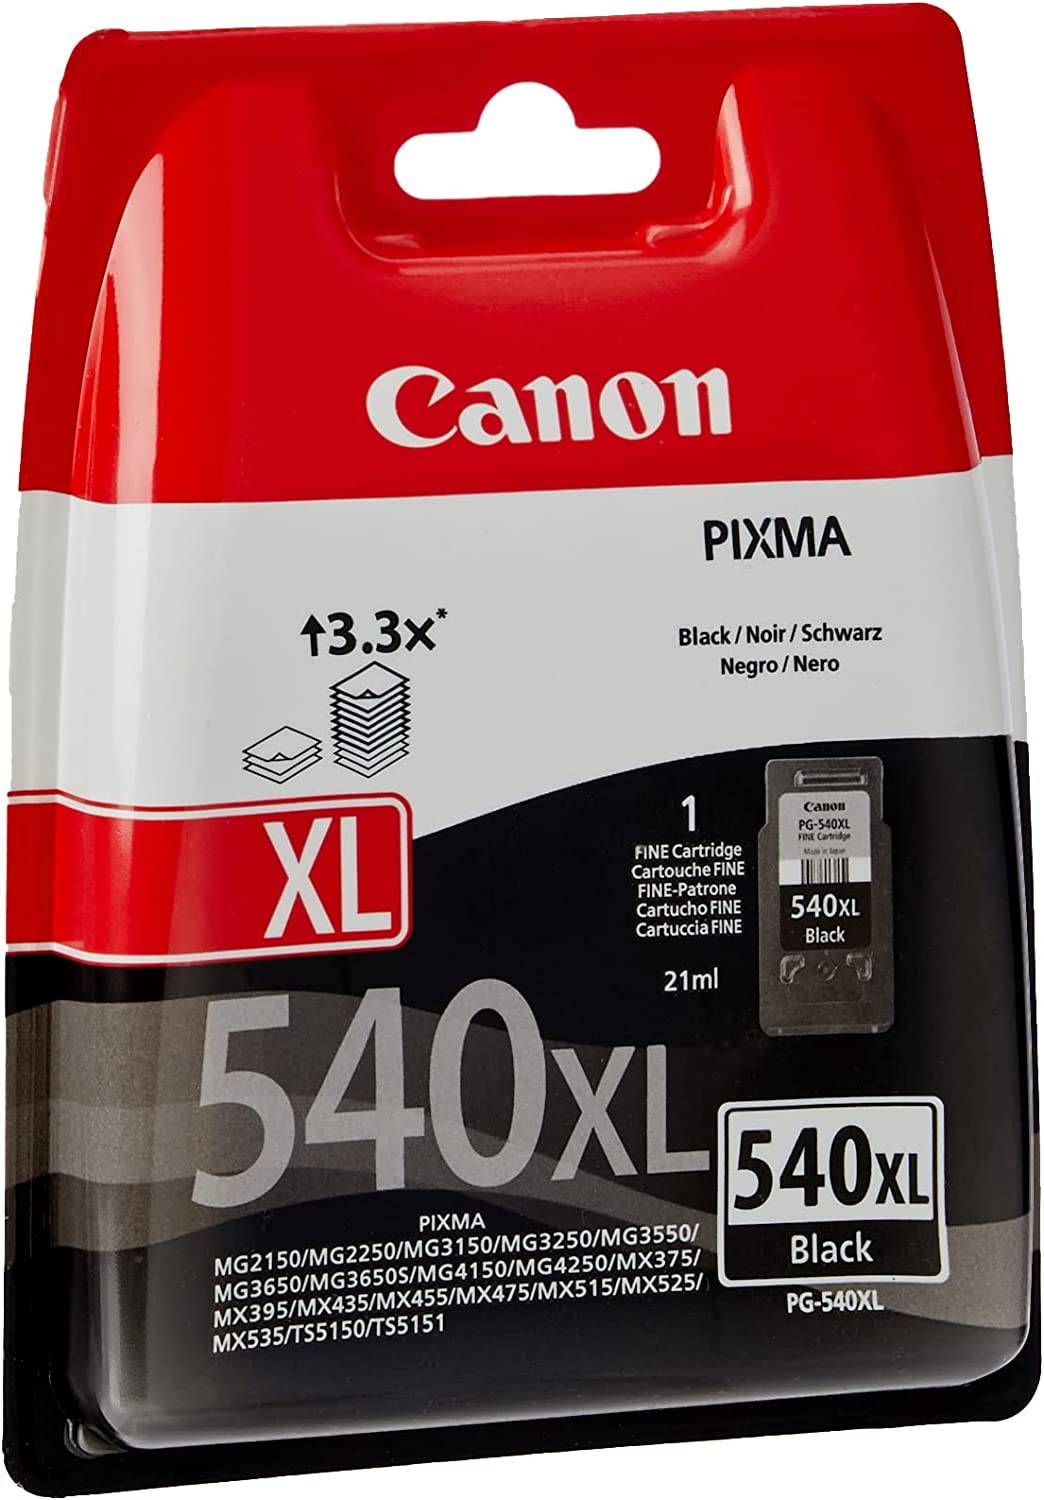  Canon PG-540XL Cartucho de tinta original para Impresora de Inyección Pixma, Negro XL